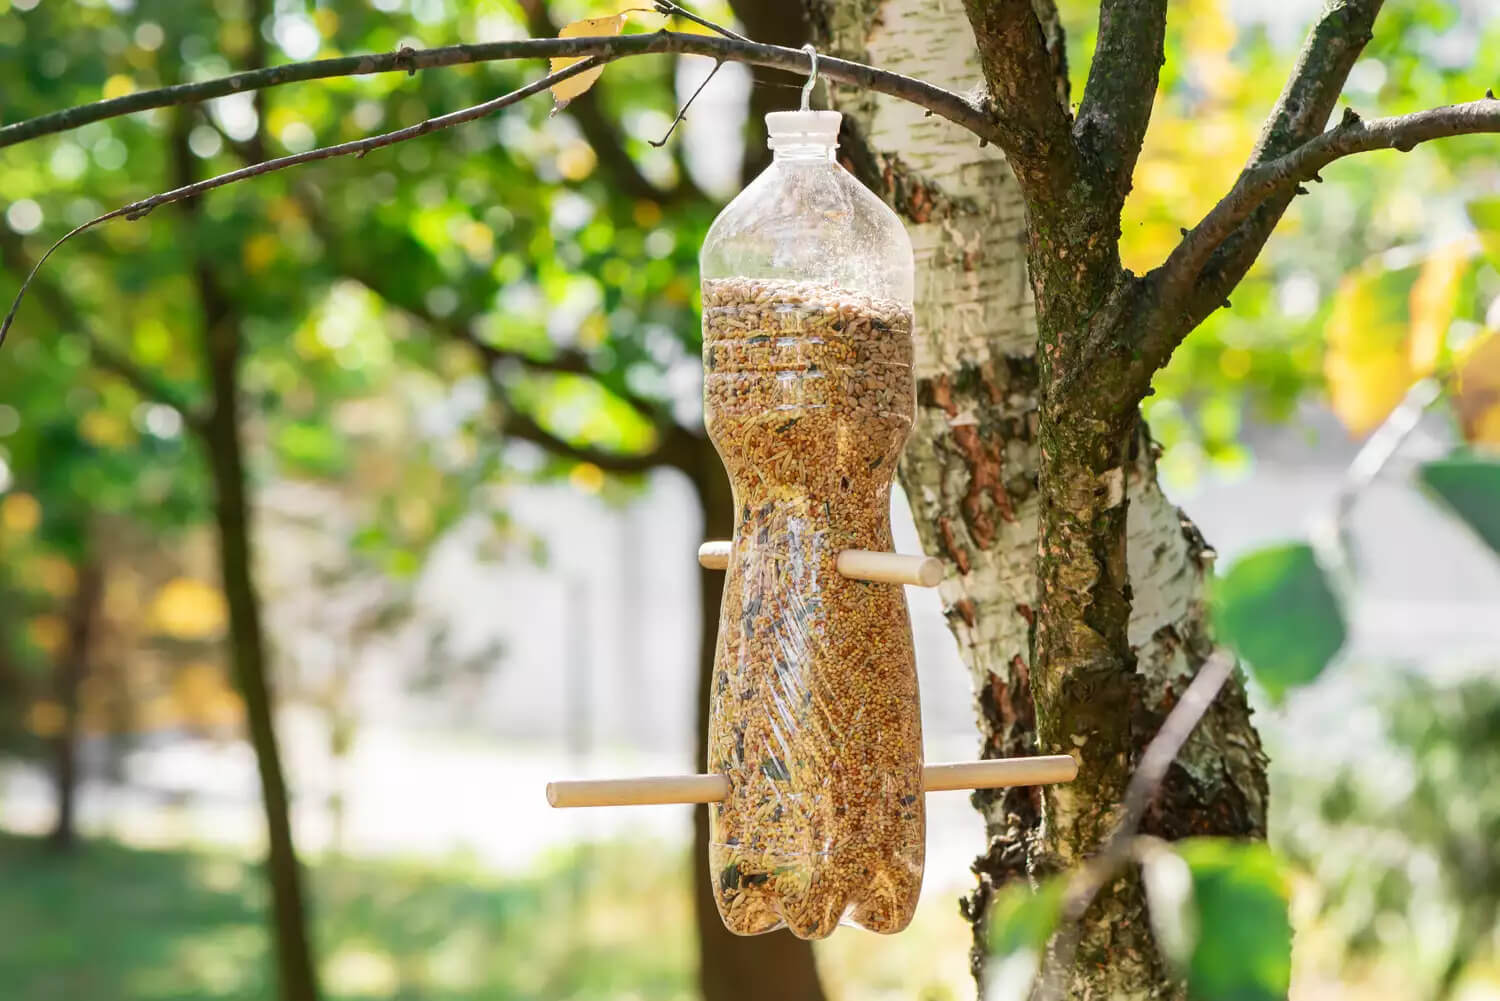 Handmade Bottle Bird Feeder Craft Using Recycled BottleRecycled Bottle Crafts With Seeds